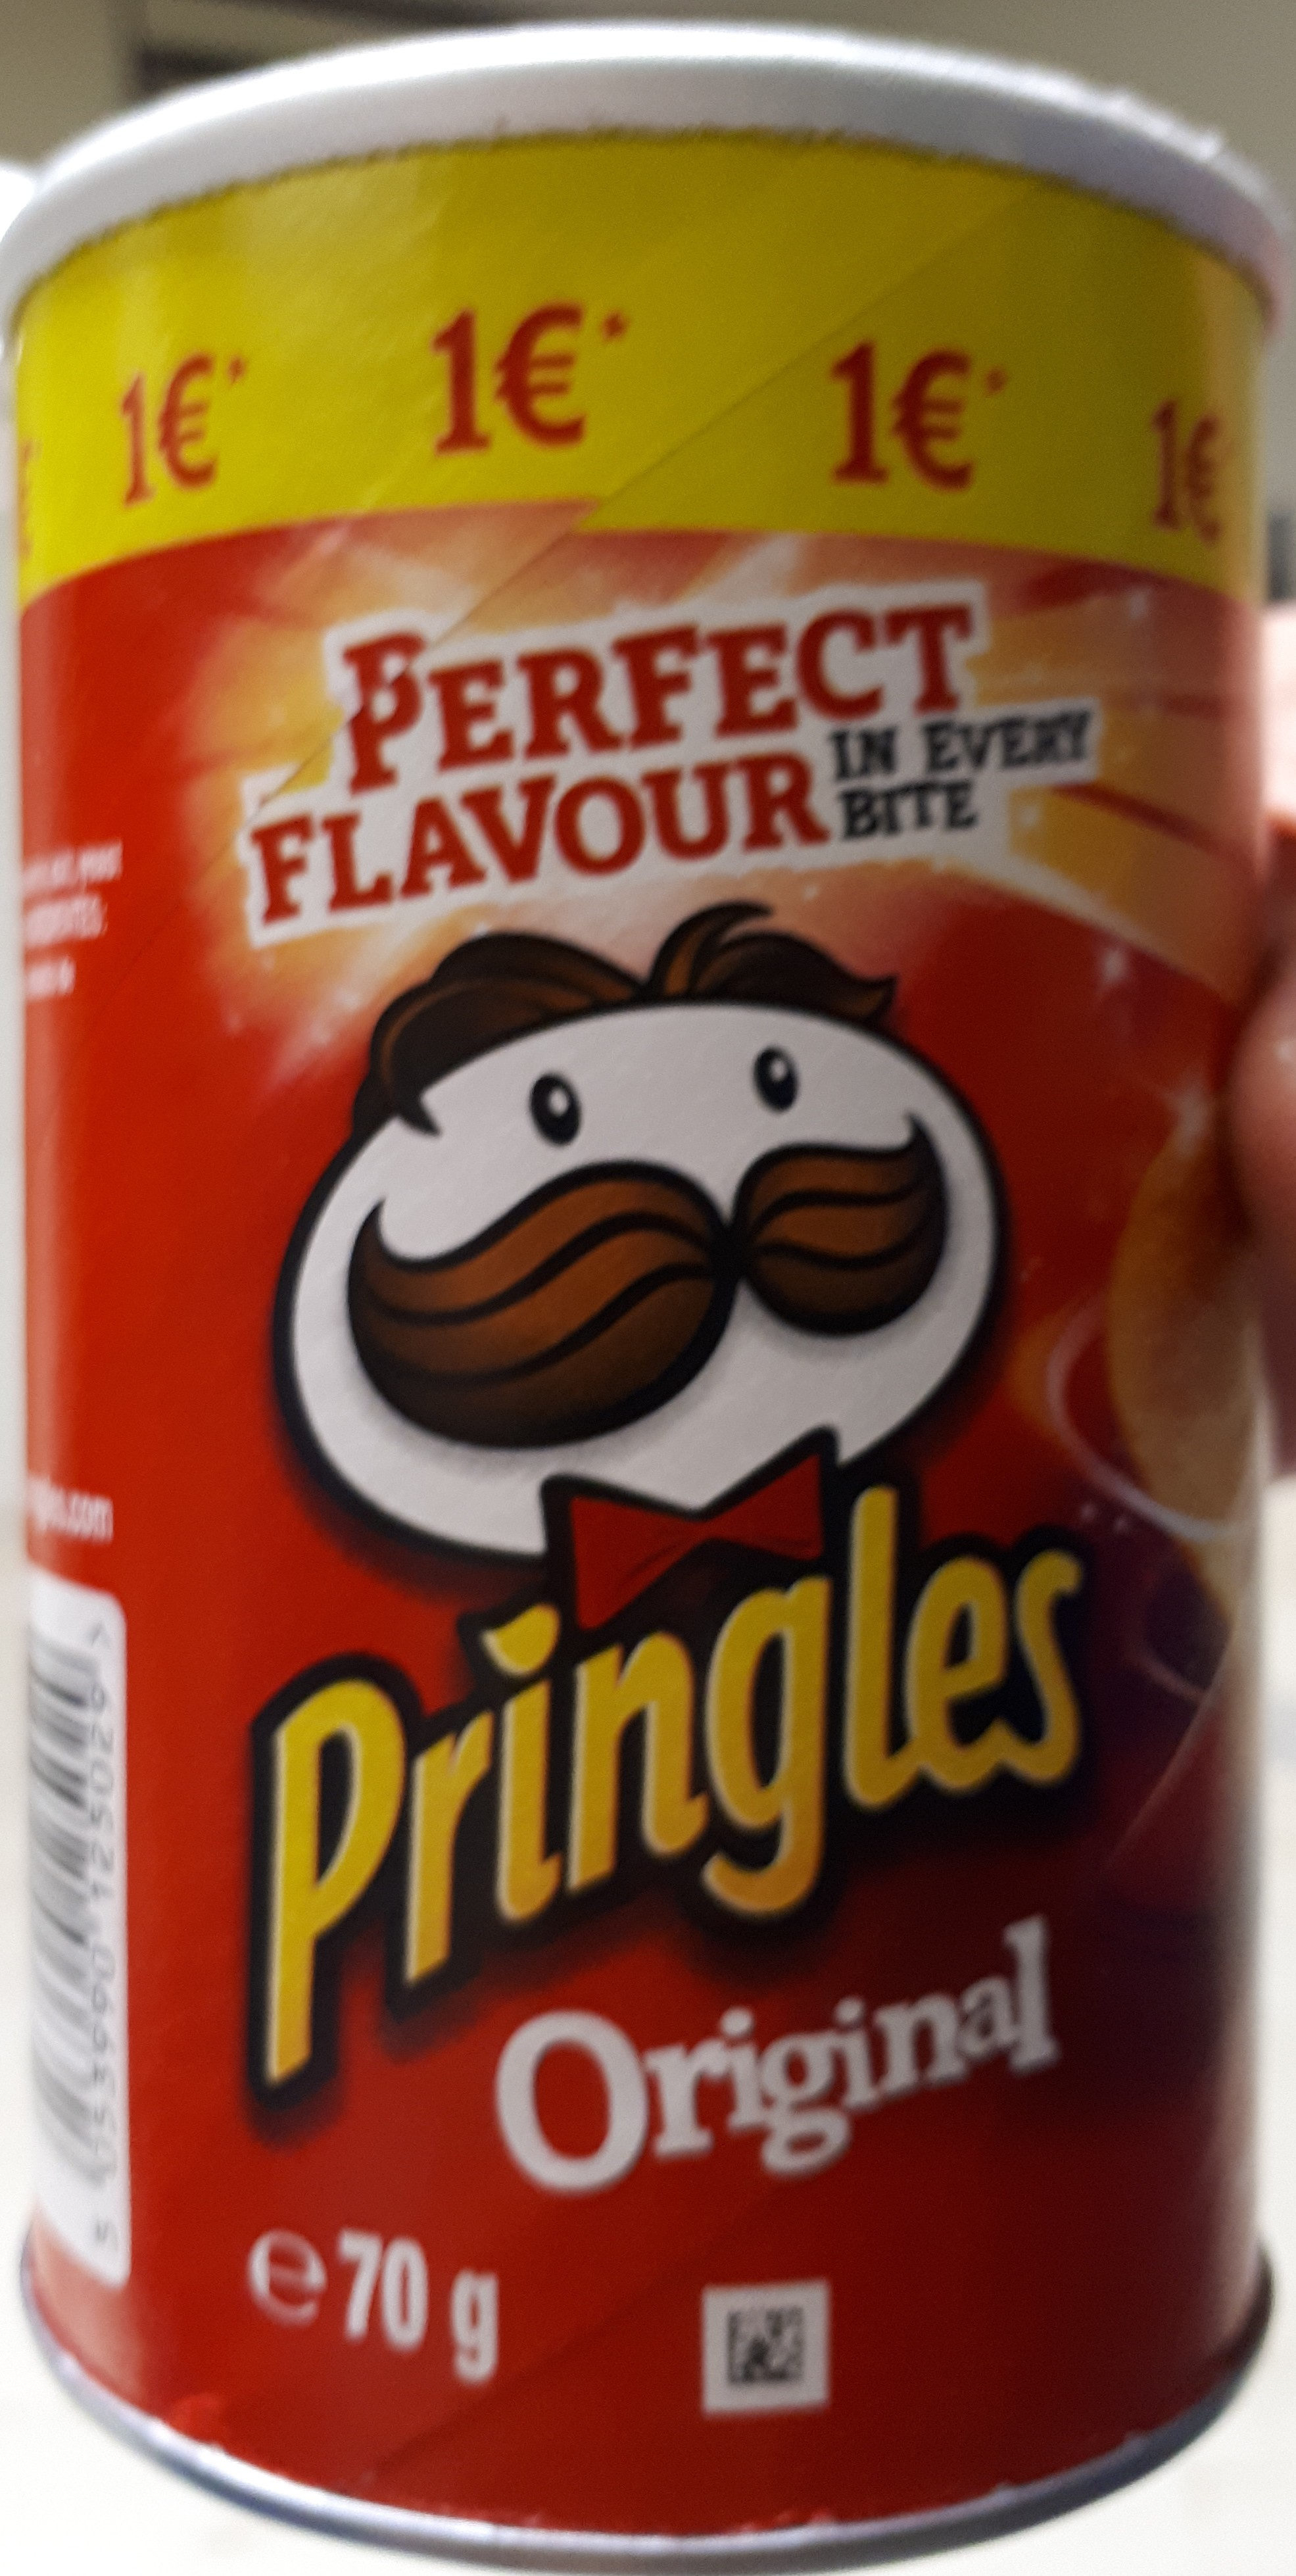 Pringles sabor Original envase 70 g - Producte - es